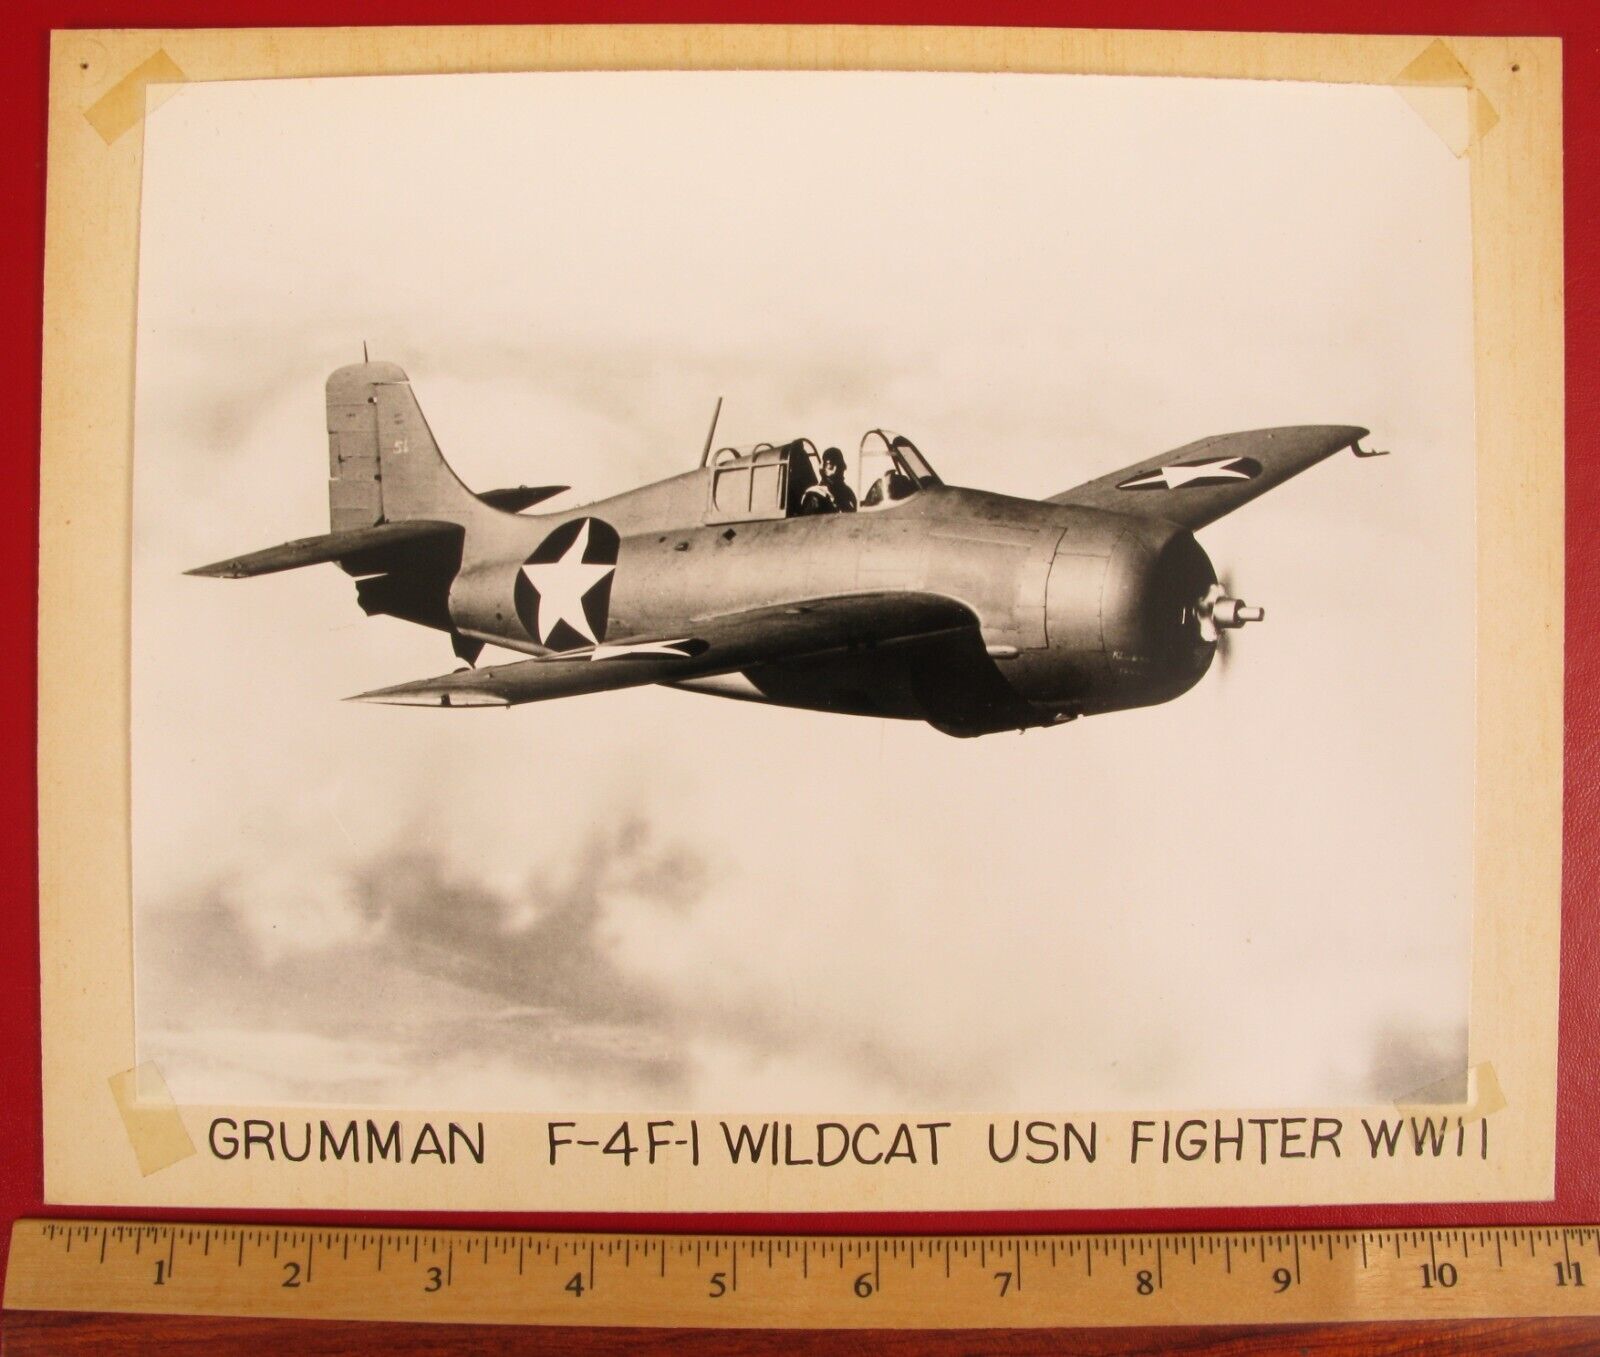 VINTAGE PHOTOGRAPH GRUMMAN F-4F-1 WILDCAT US NAVY USN FIGHTER MILITARY AIRPLANE